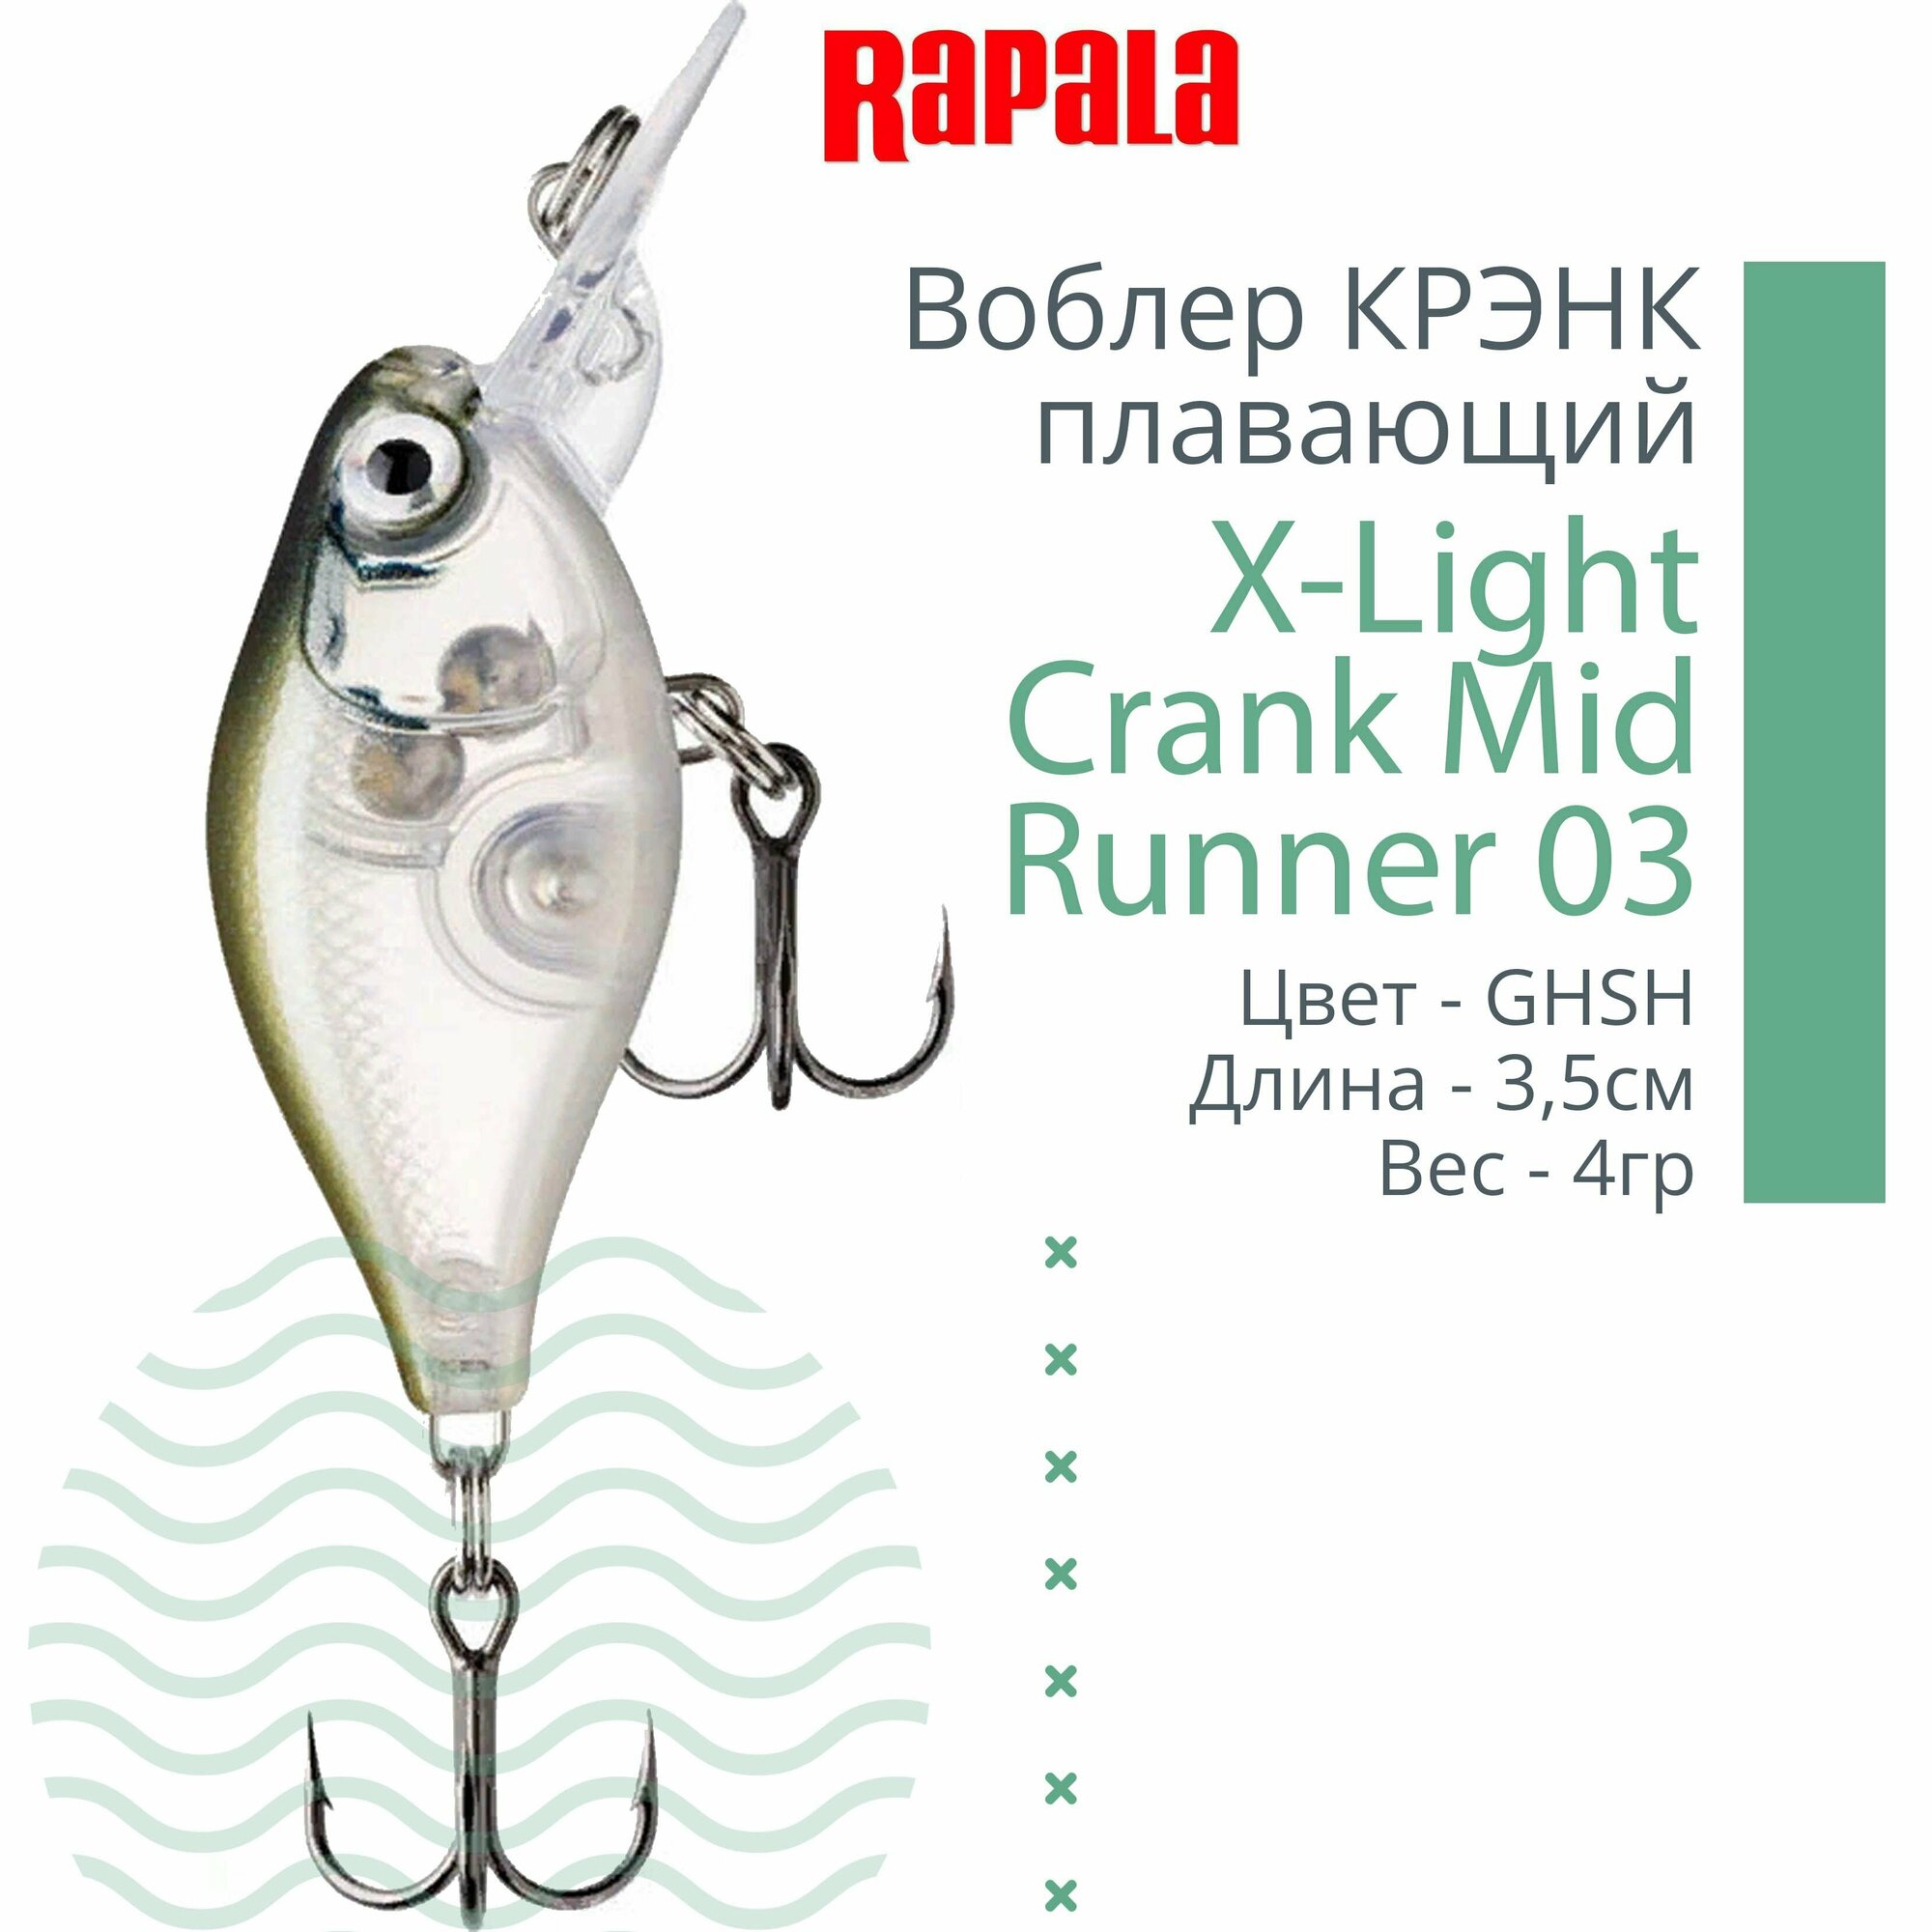 Воблер для рыбалки RAPALA X-Light Crank Mid Runner 03, 3,5см, 4гр, цвет GHSH, плавающий